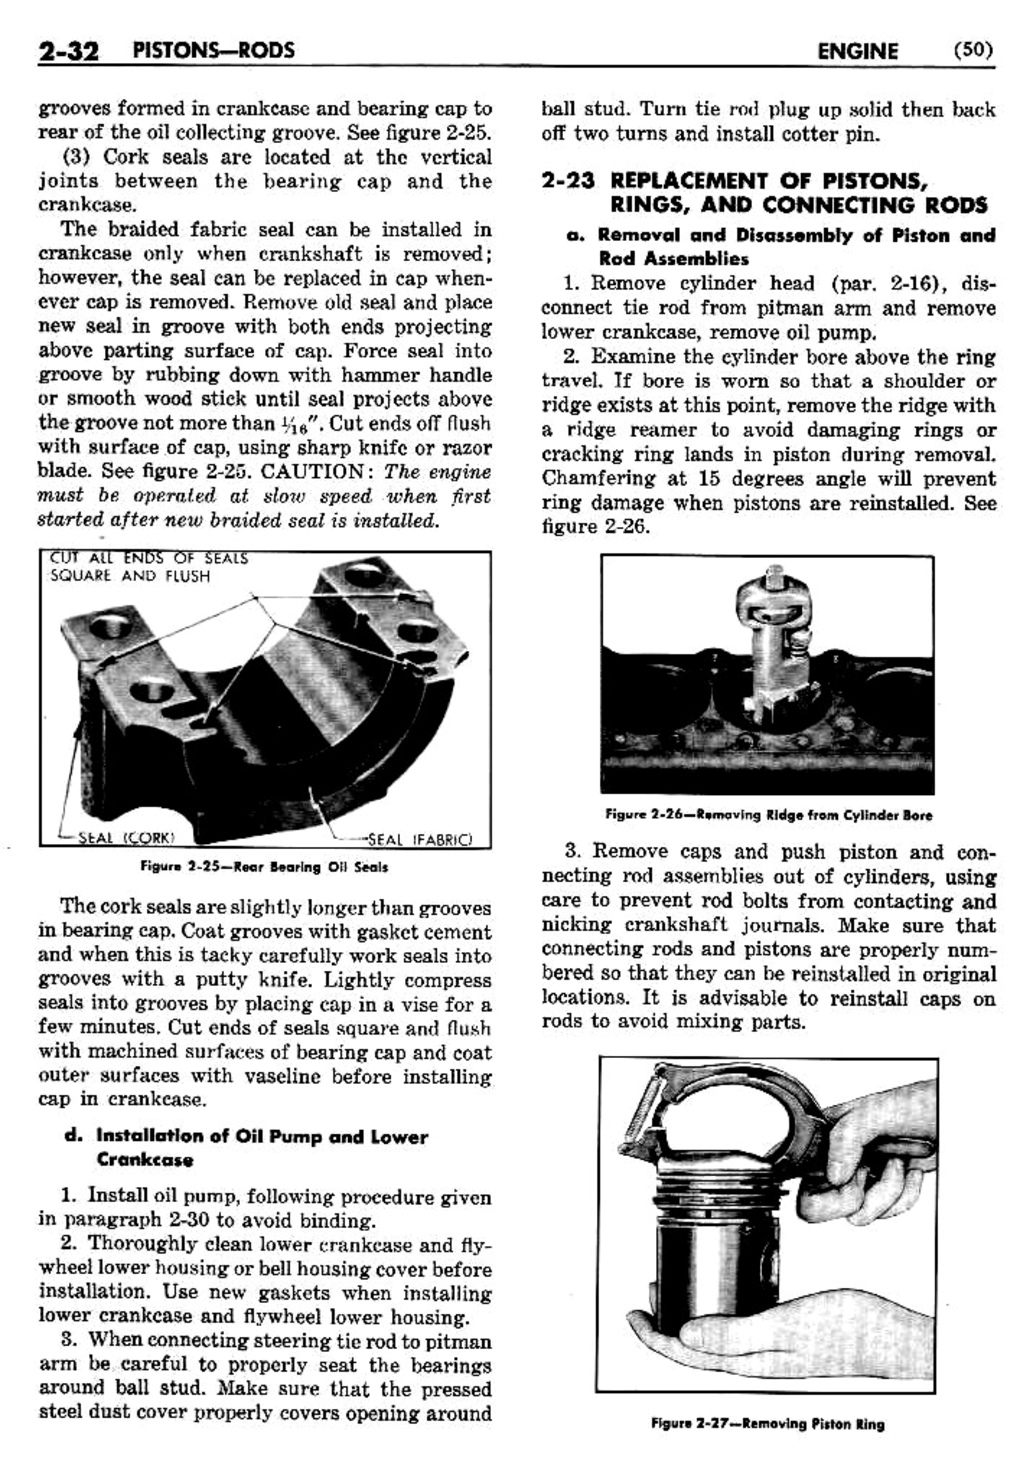 n_03 1950 Buick Shop Manual - Engine-032-032.jpg